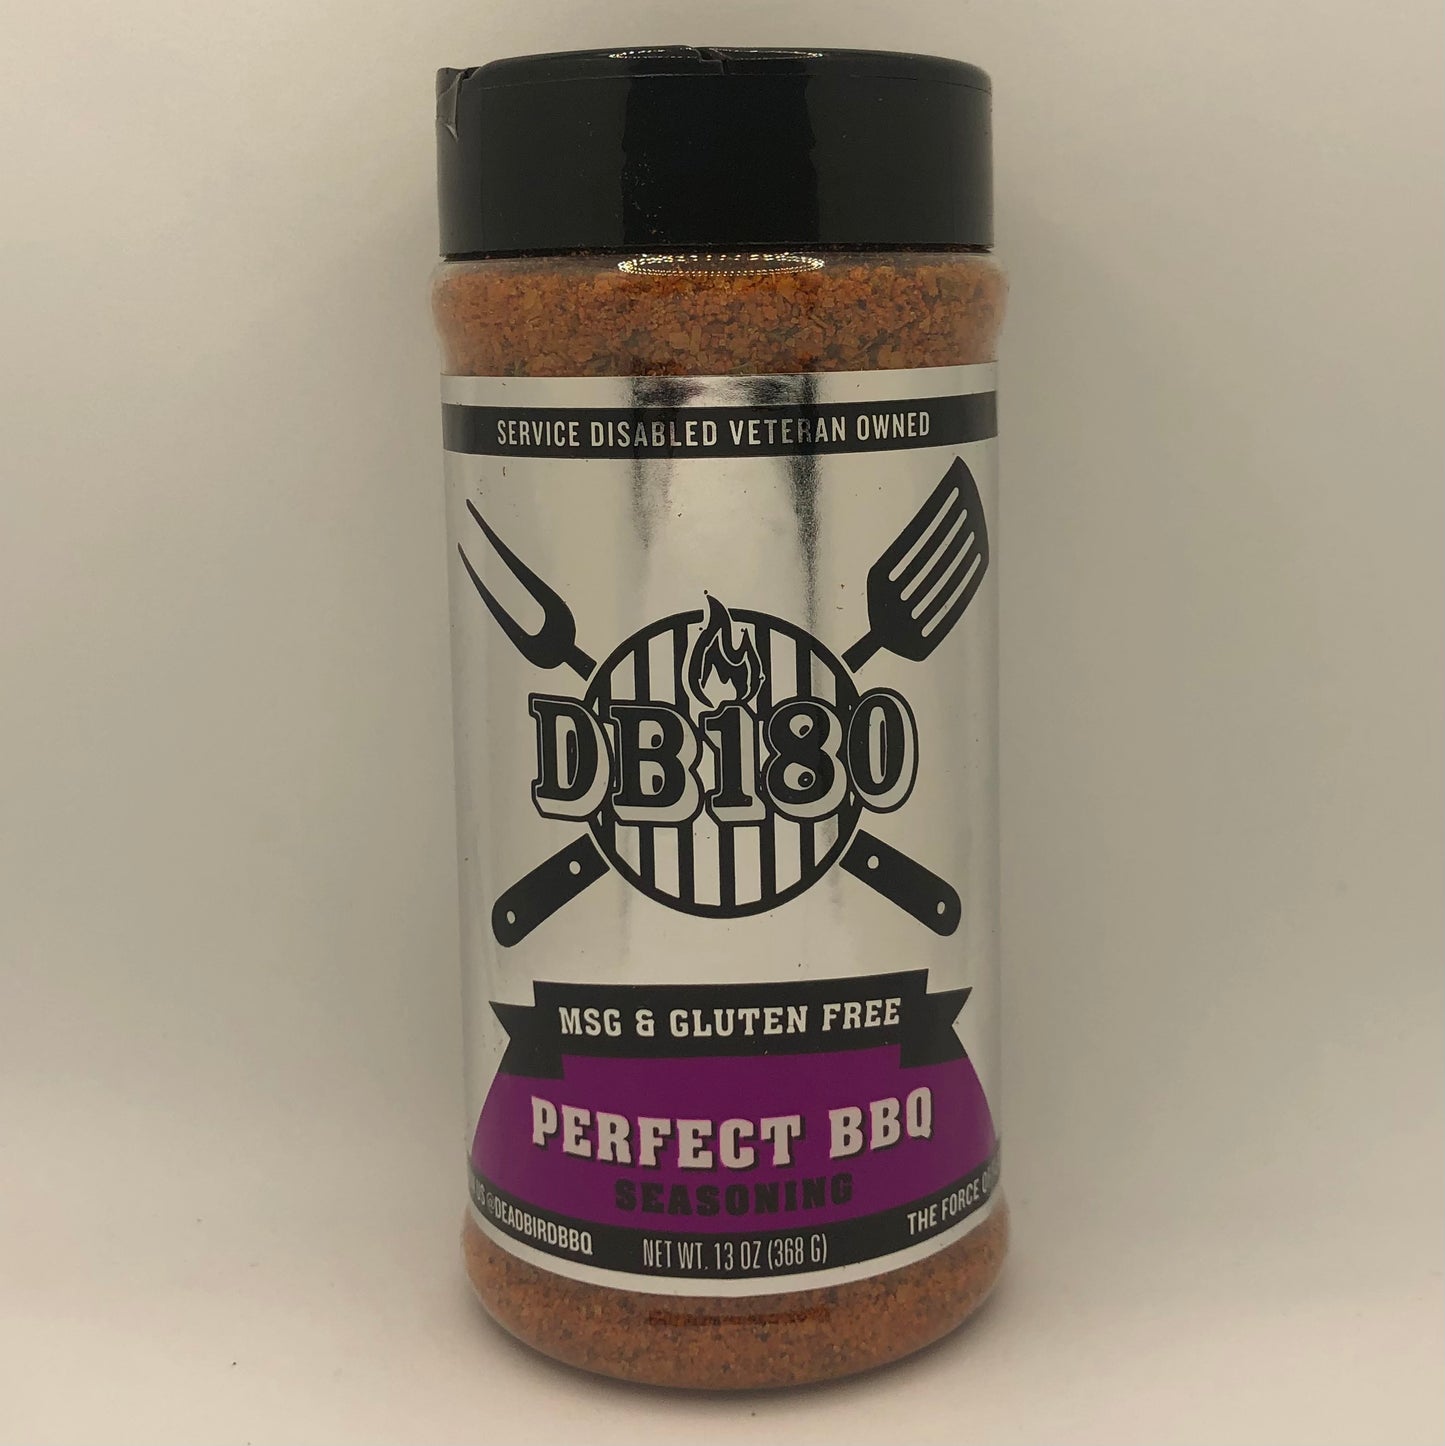 DB180 Perfect BBQ Seasoning